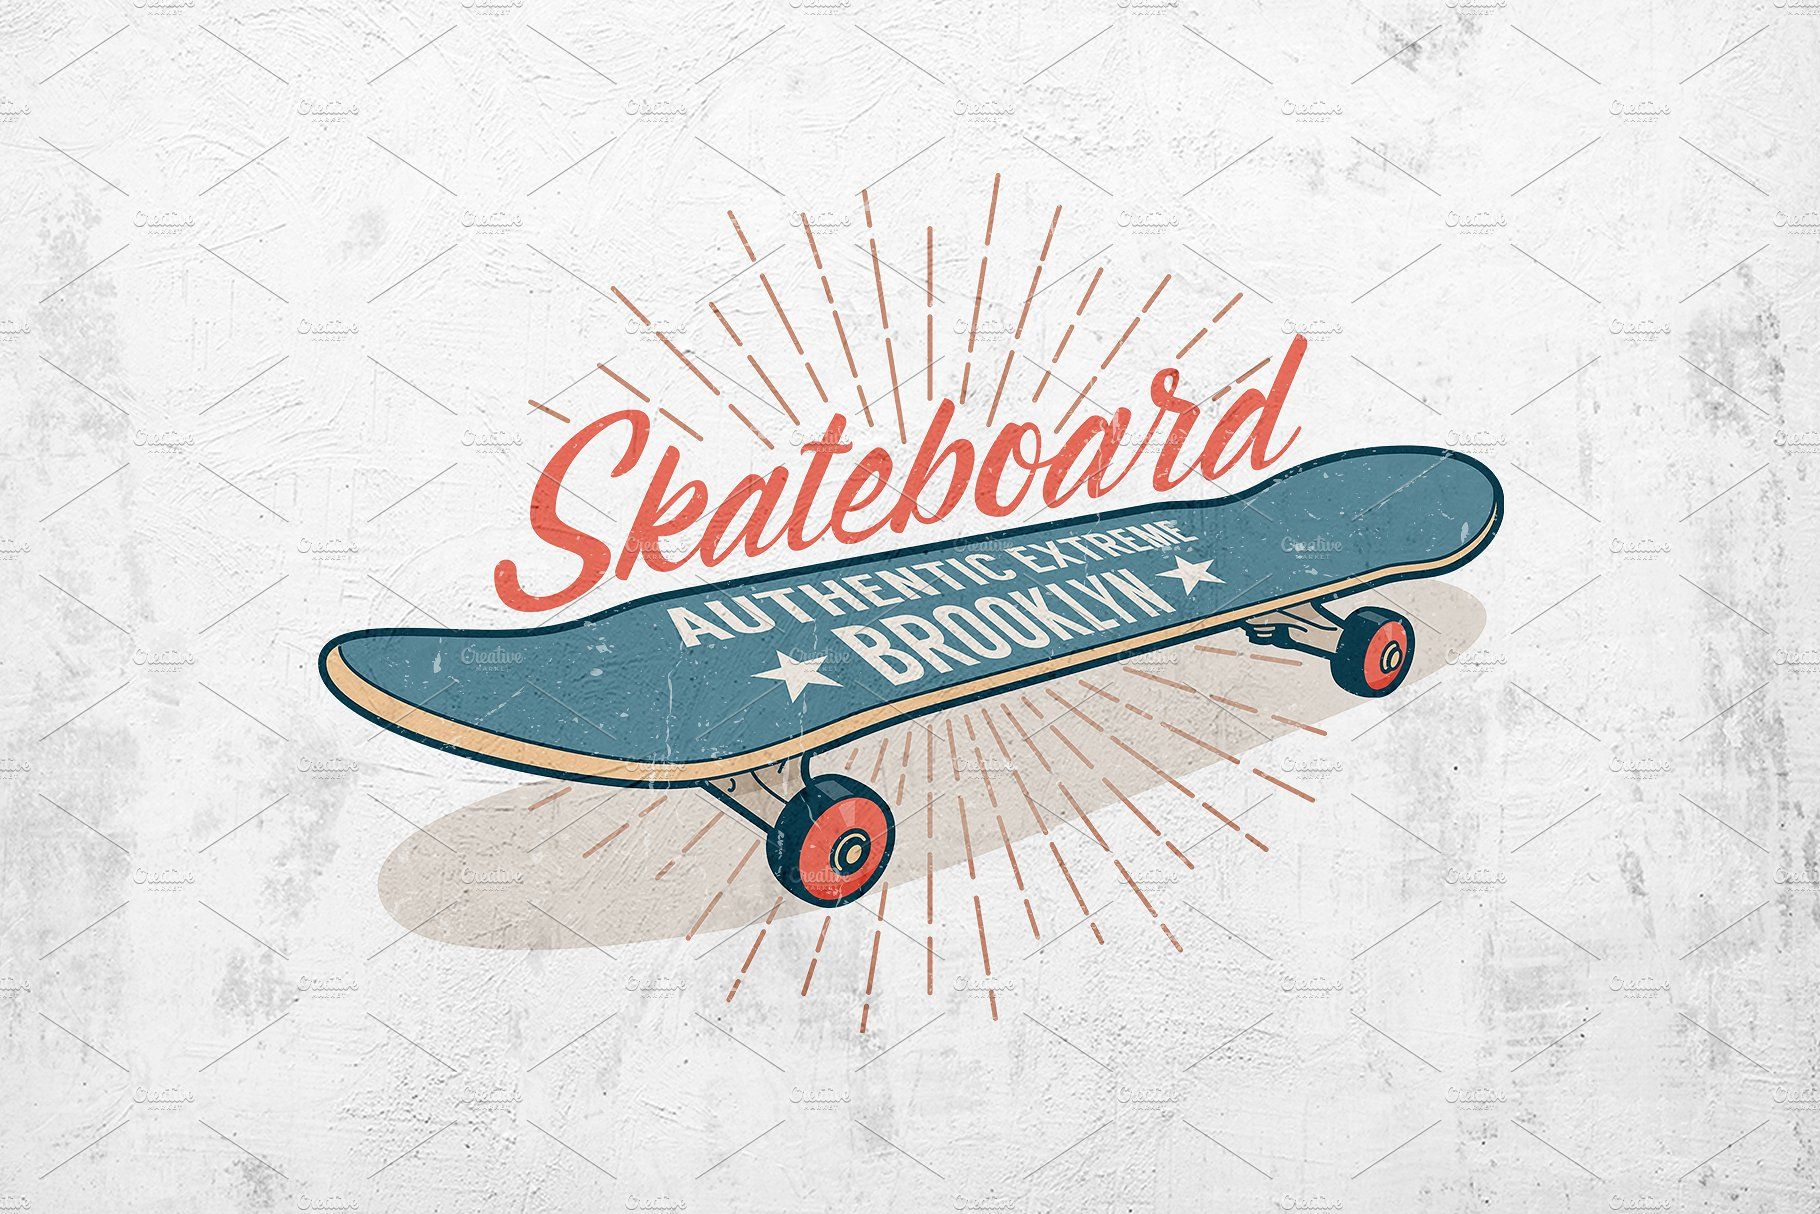 Retro Skateboard Wallpapers